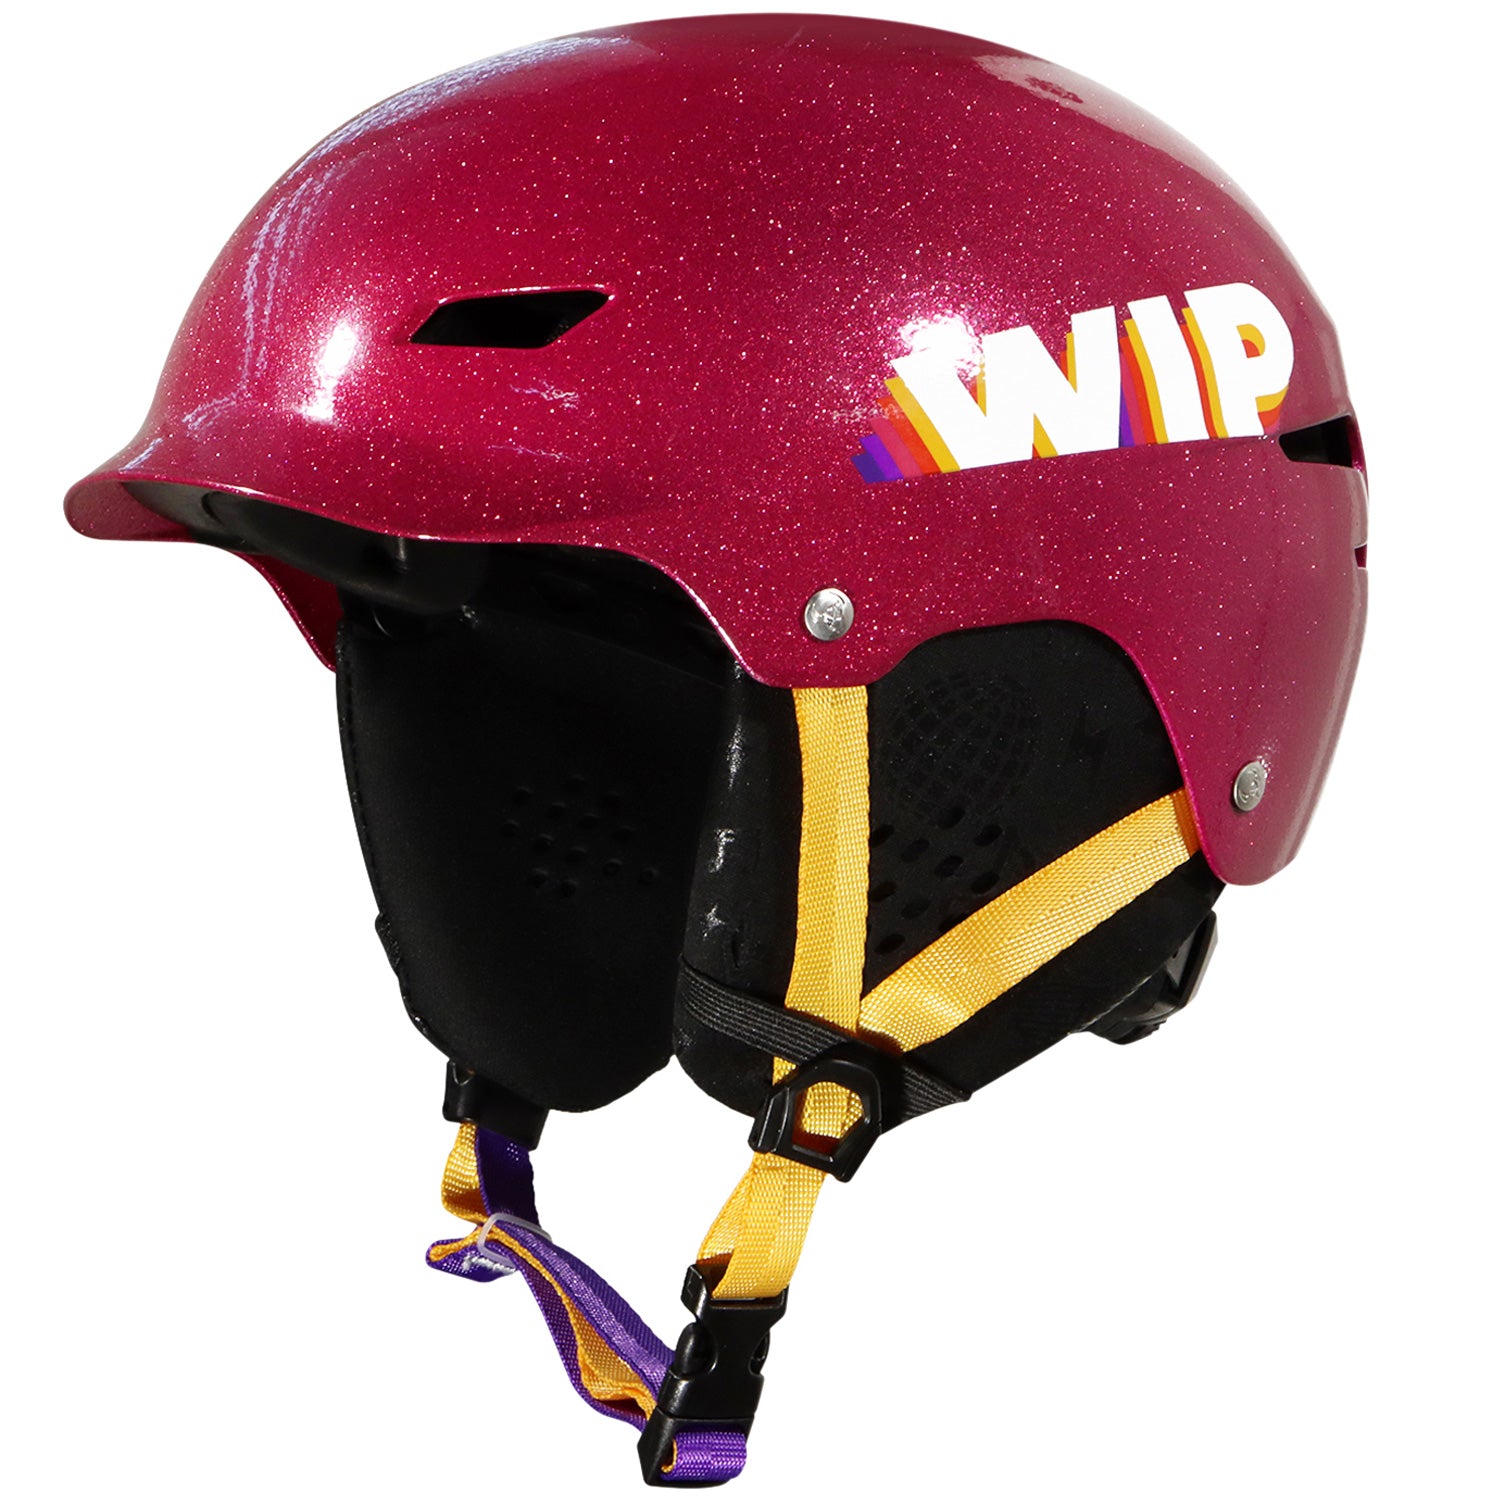 Forward Wip Pro Wipper 2.0 Safety Helmet